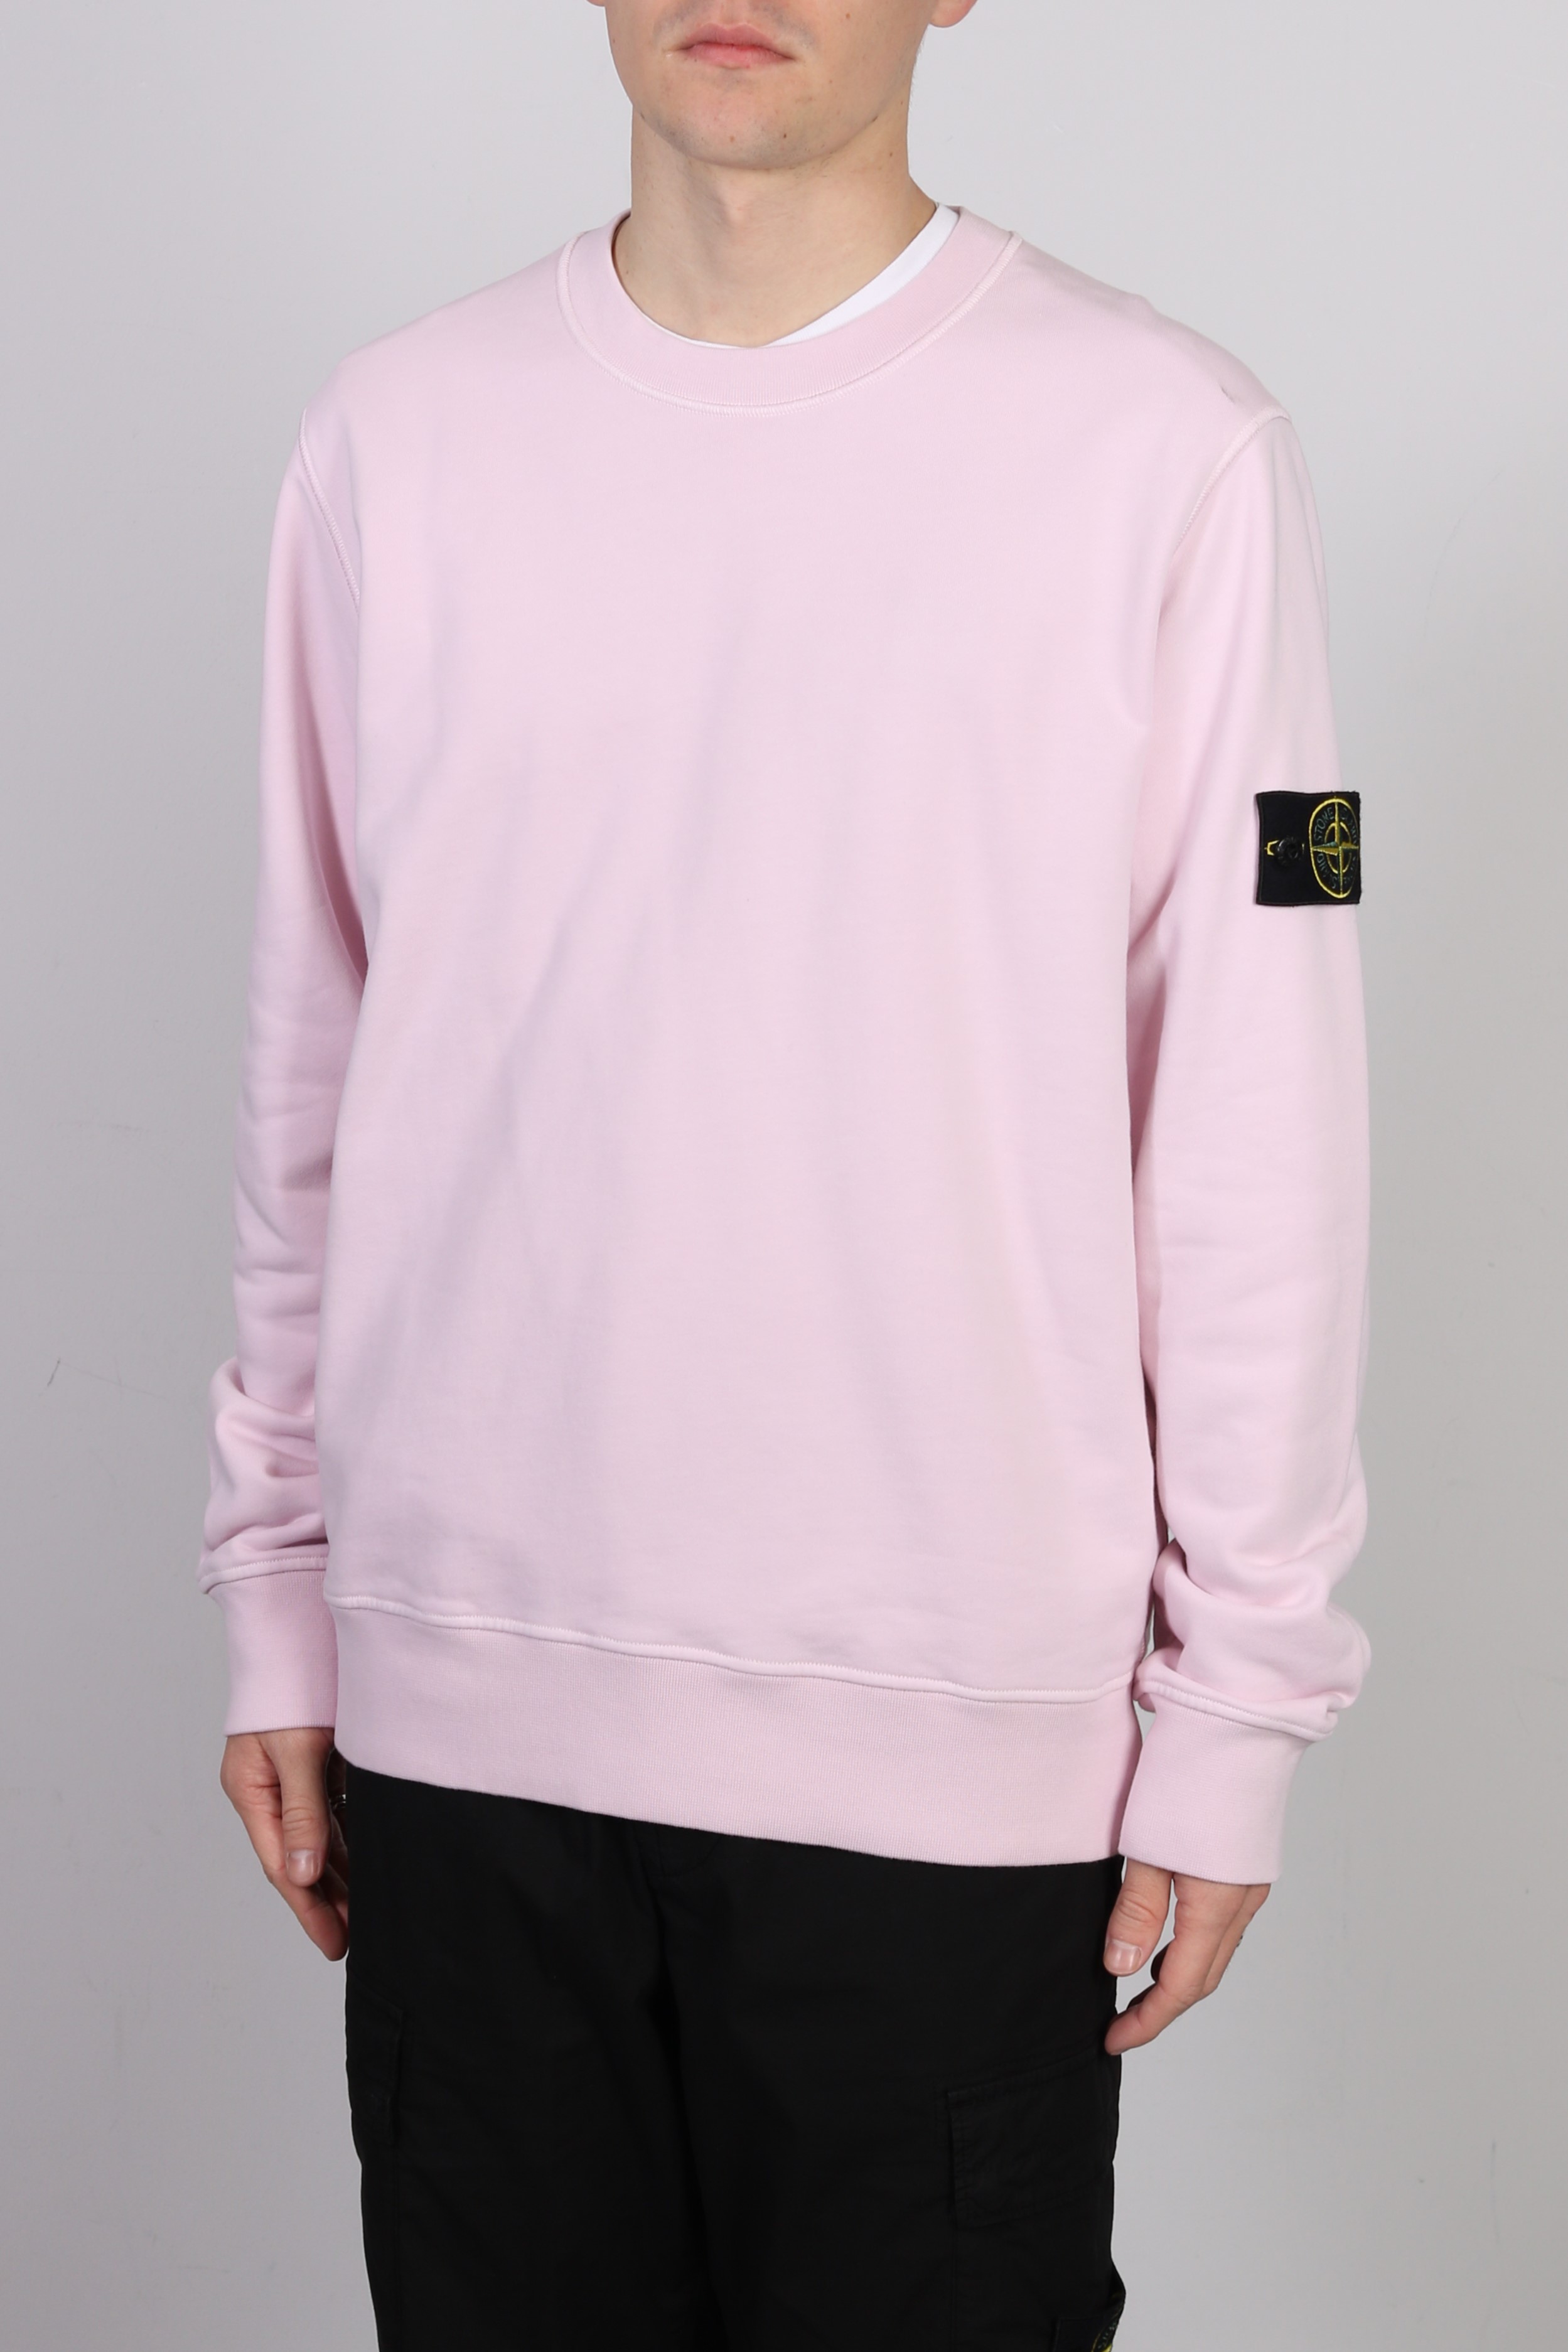 STONE ISLAND Sweatshirt in Light Pink S